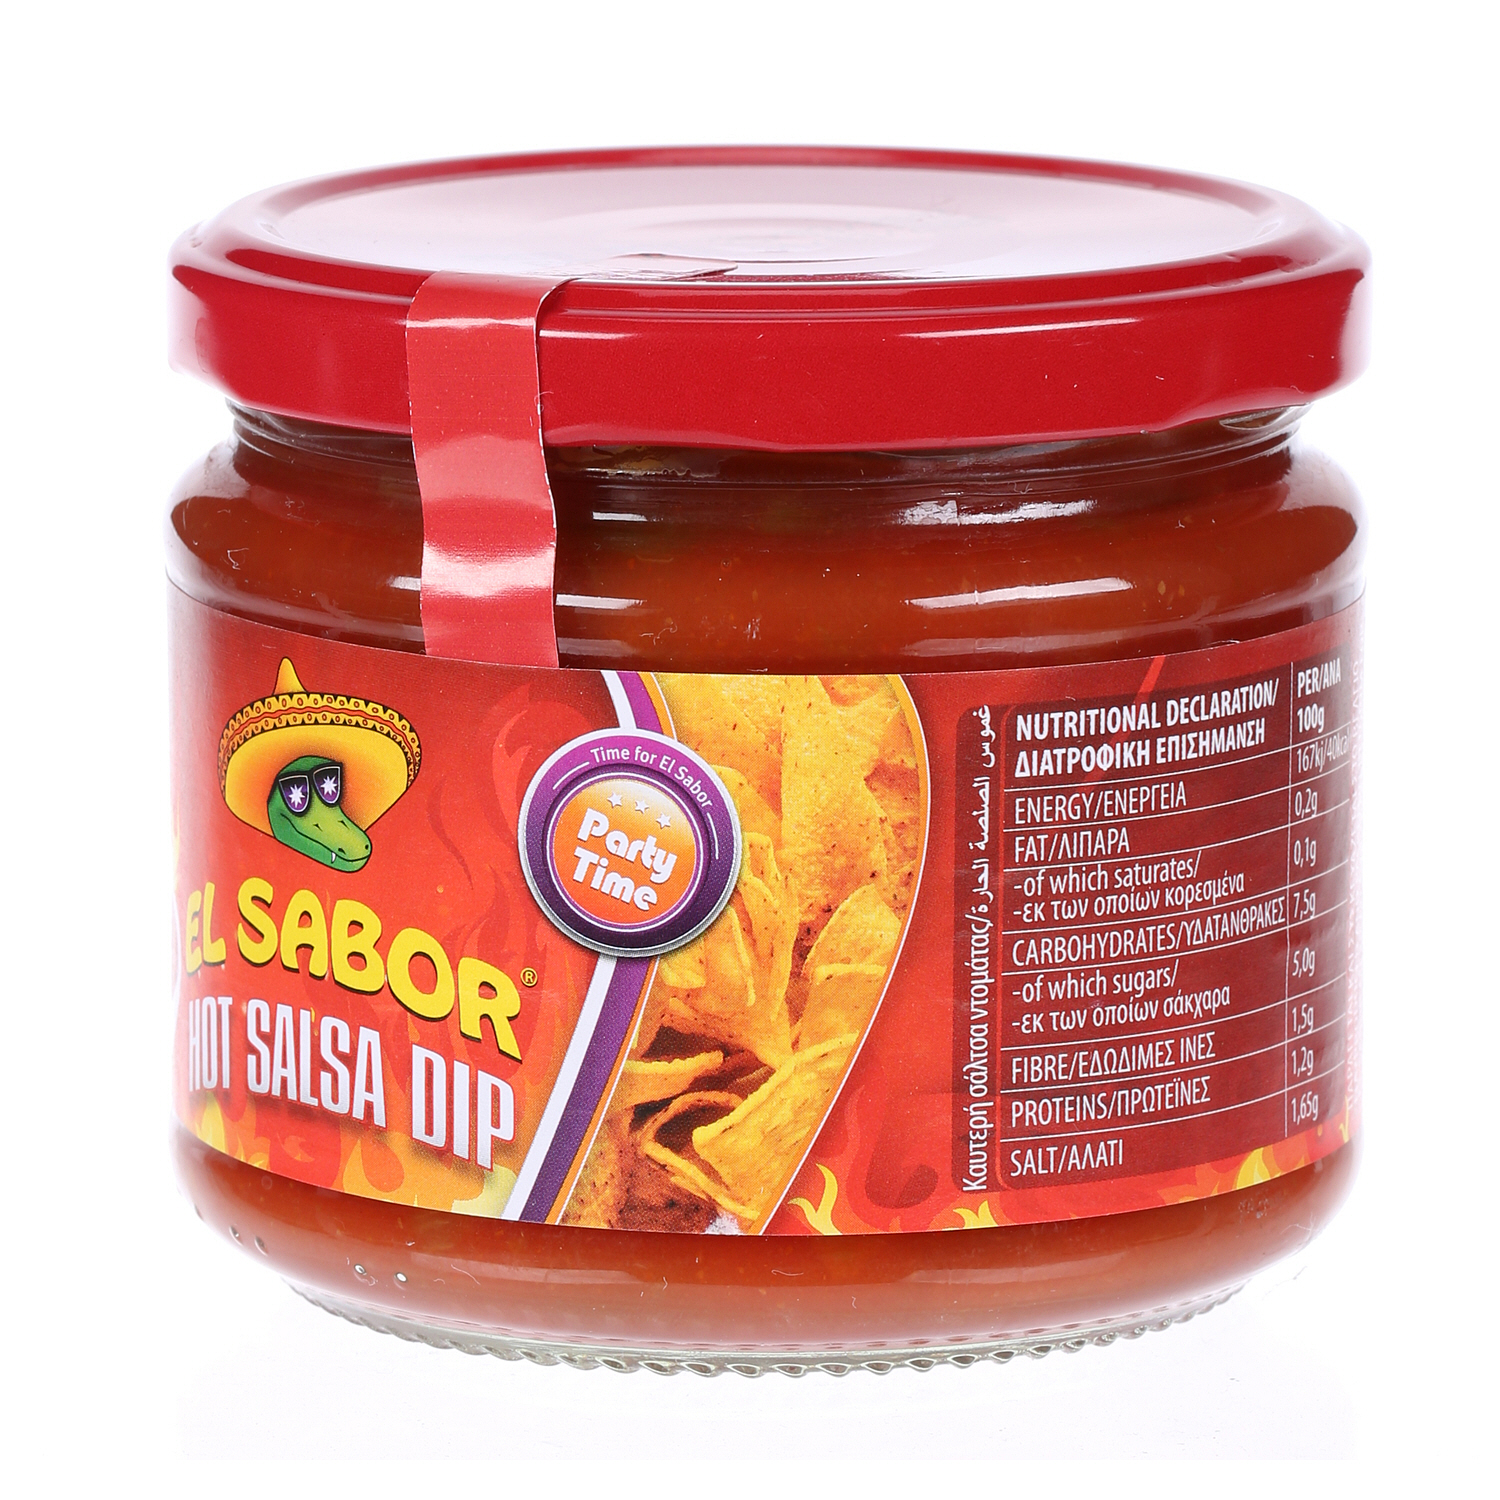 El Sabor Hot Salsa Dip Jar 300gm